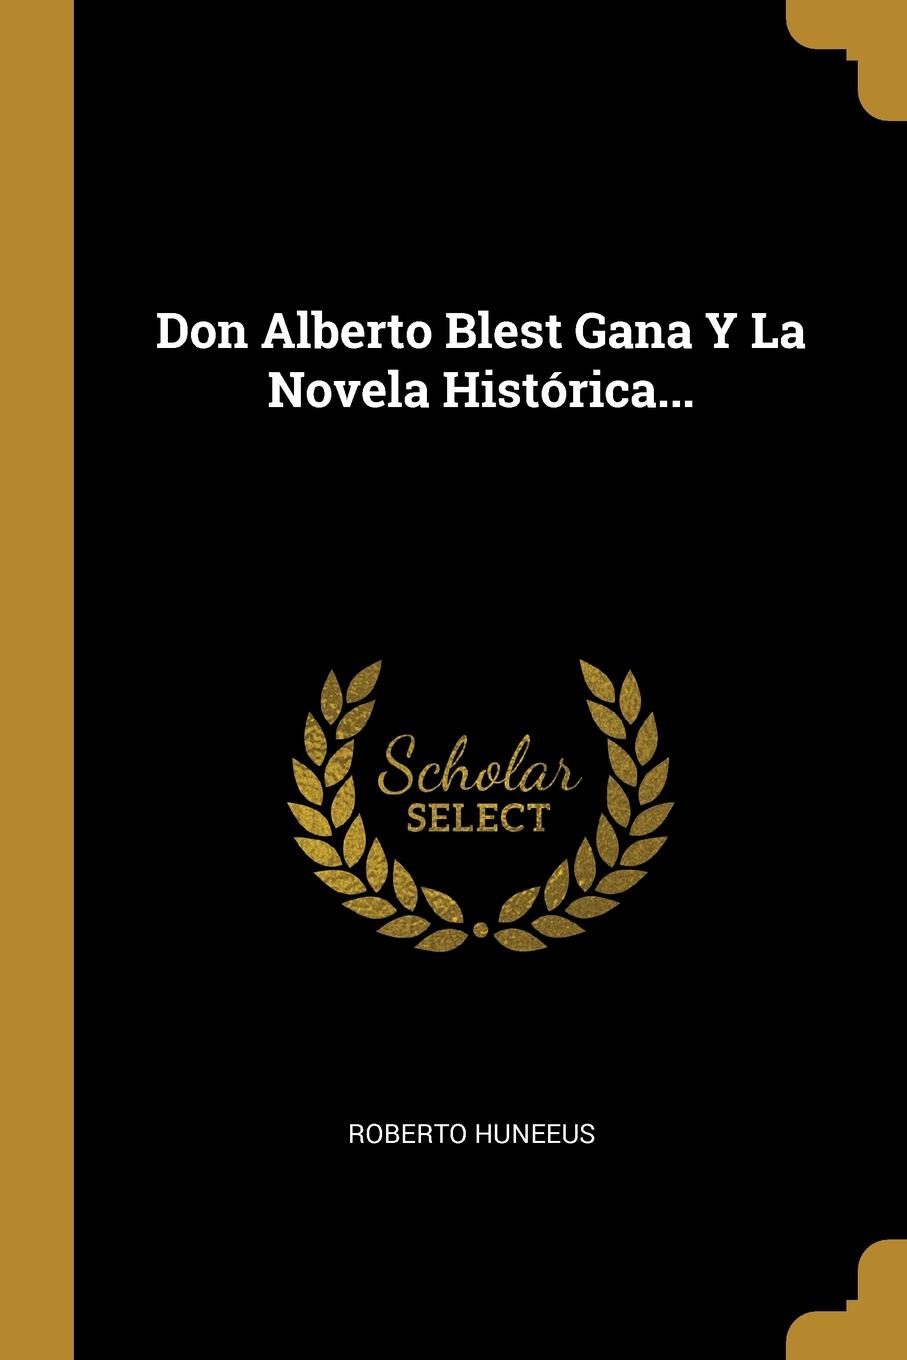 Don Alberto Blest Gana Y La Novela Historica...